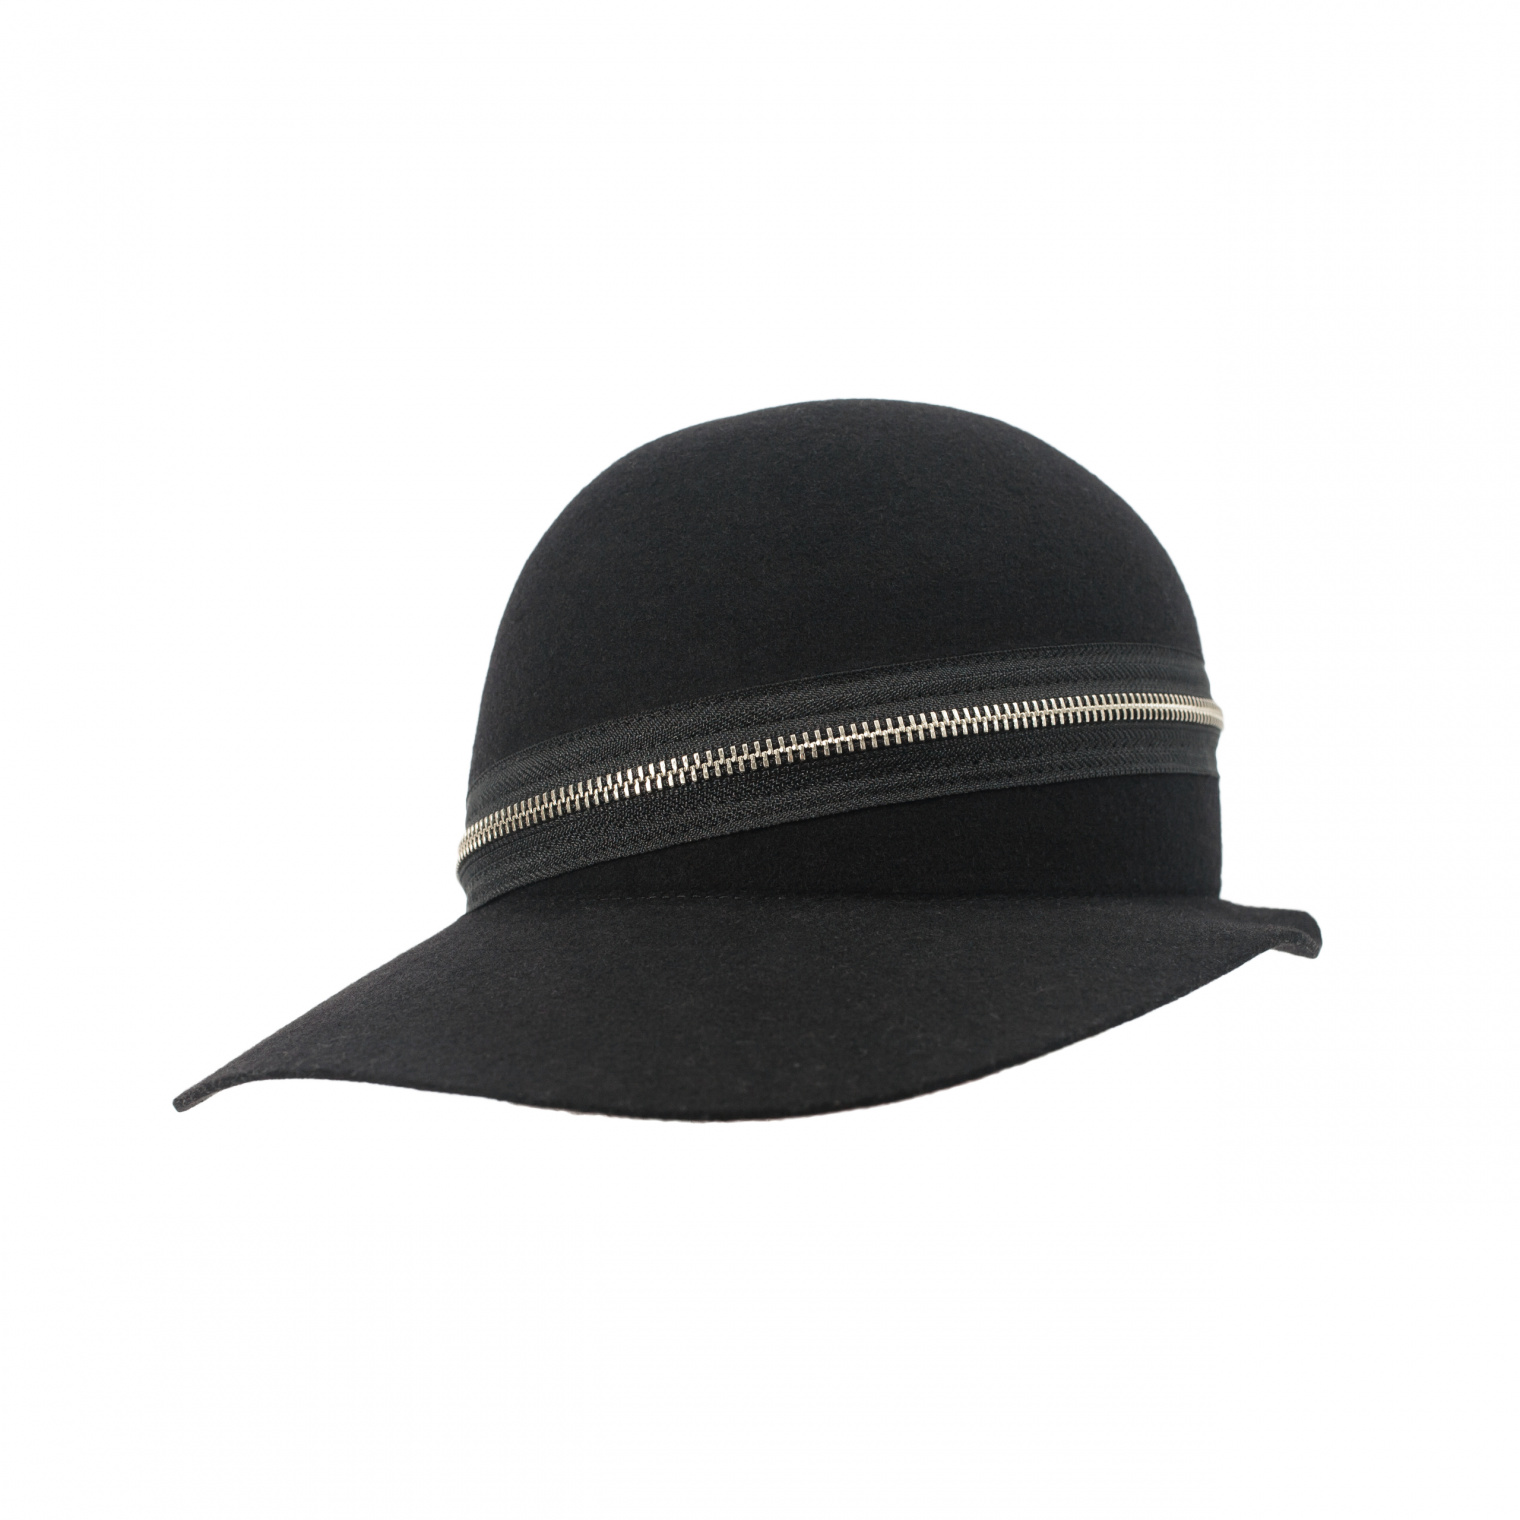 Yohji Yamamoto Black Wool Cap